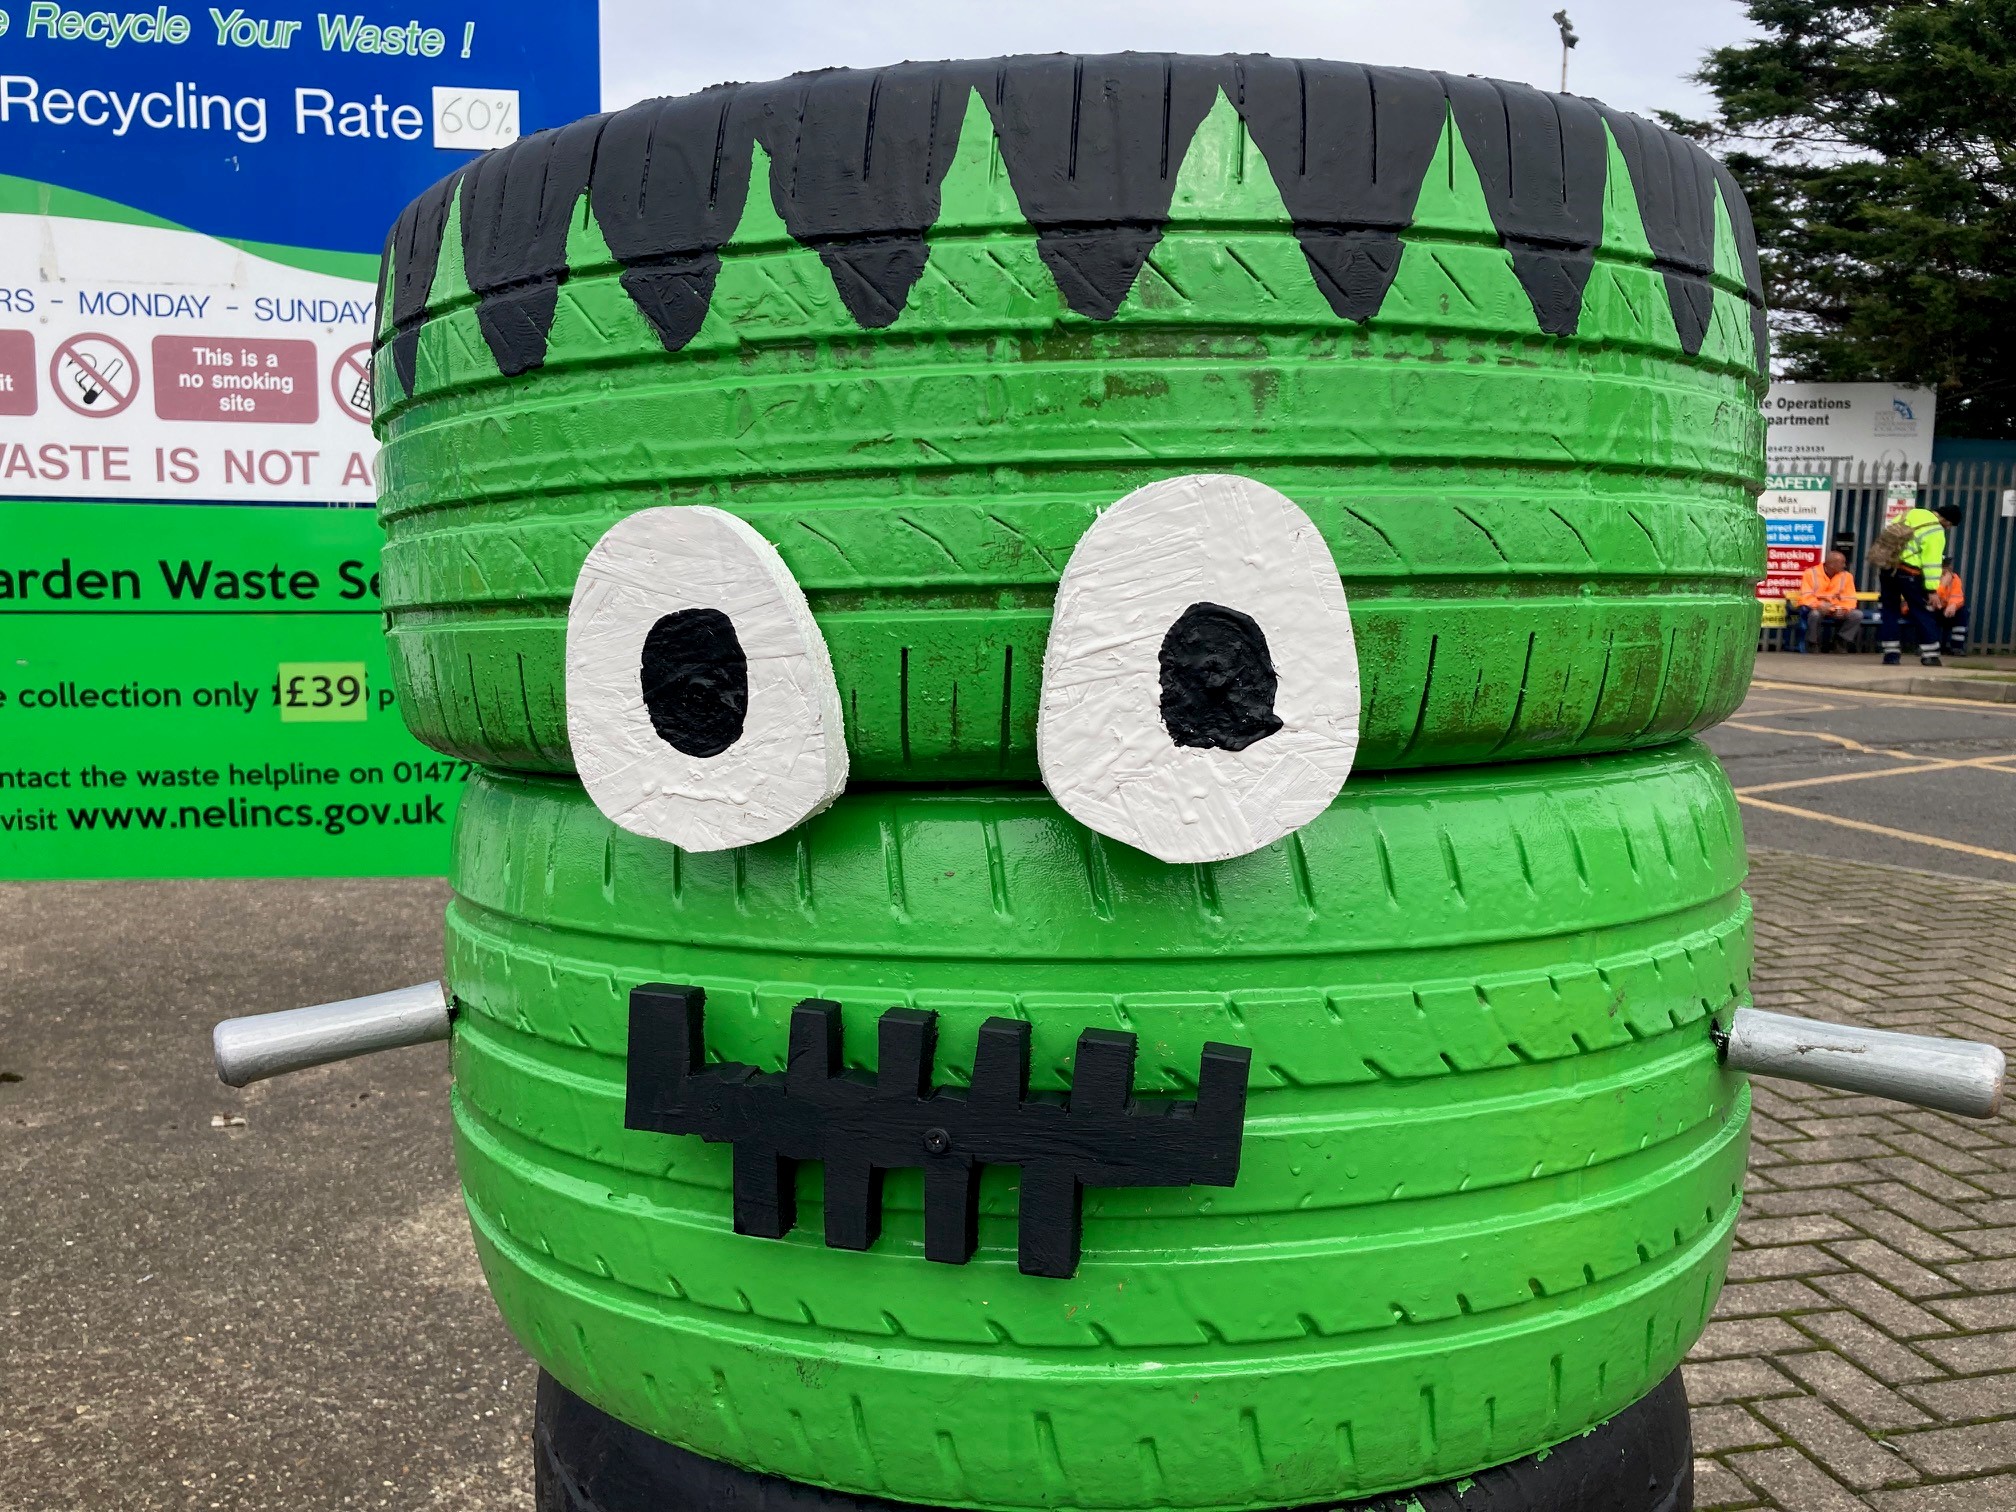 Frankenstein's monster made of tyres